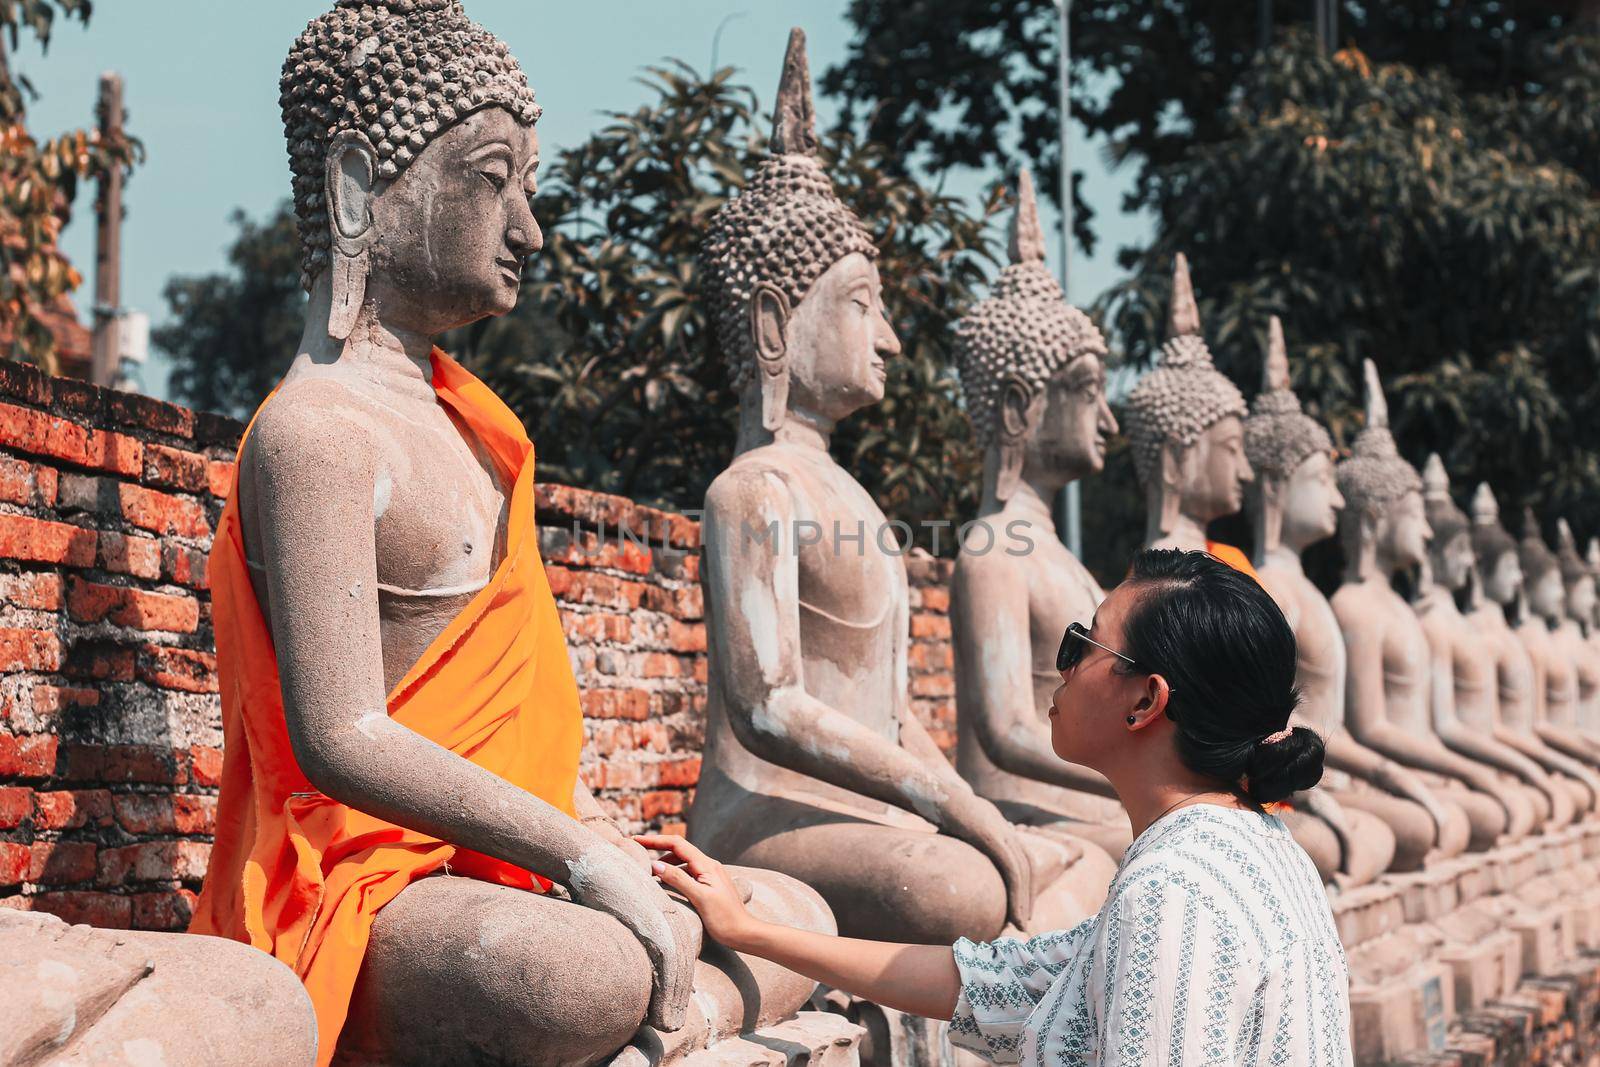 Asian girl exploring the row of Buddha statues at Wat Yai Chai Mongkhon temple in Ayutthaya, Thailand